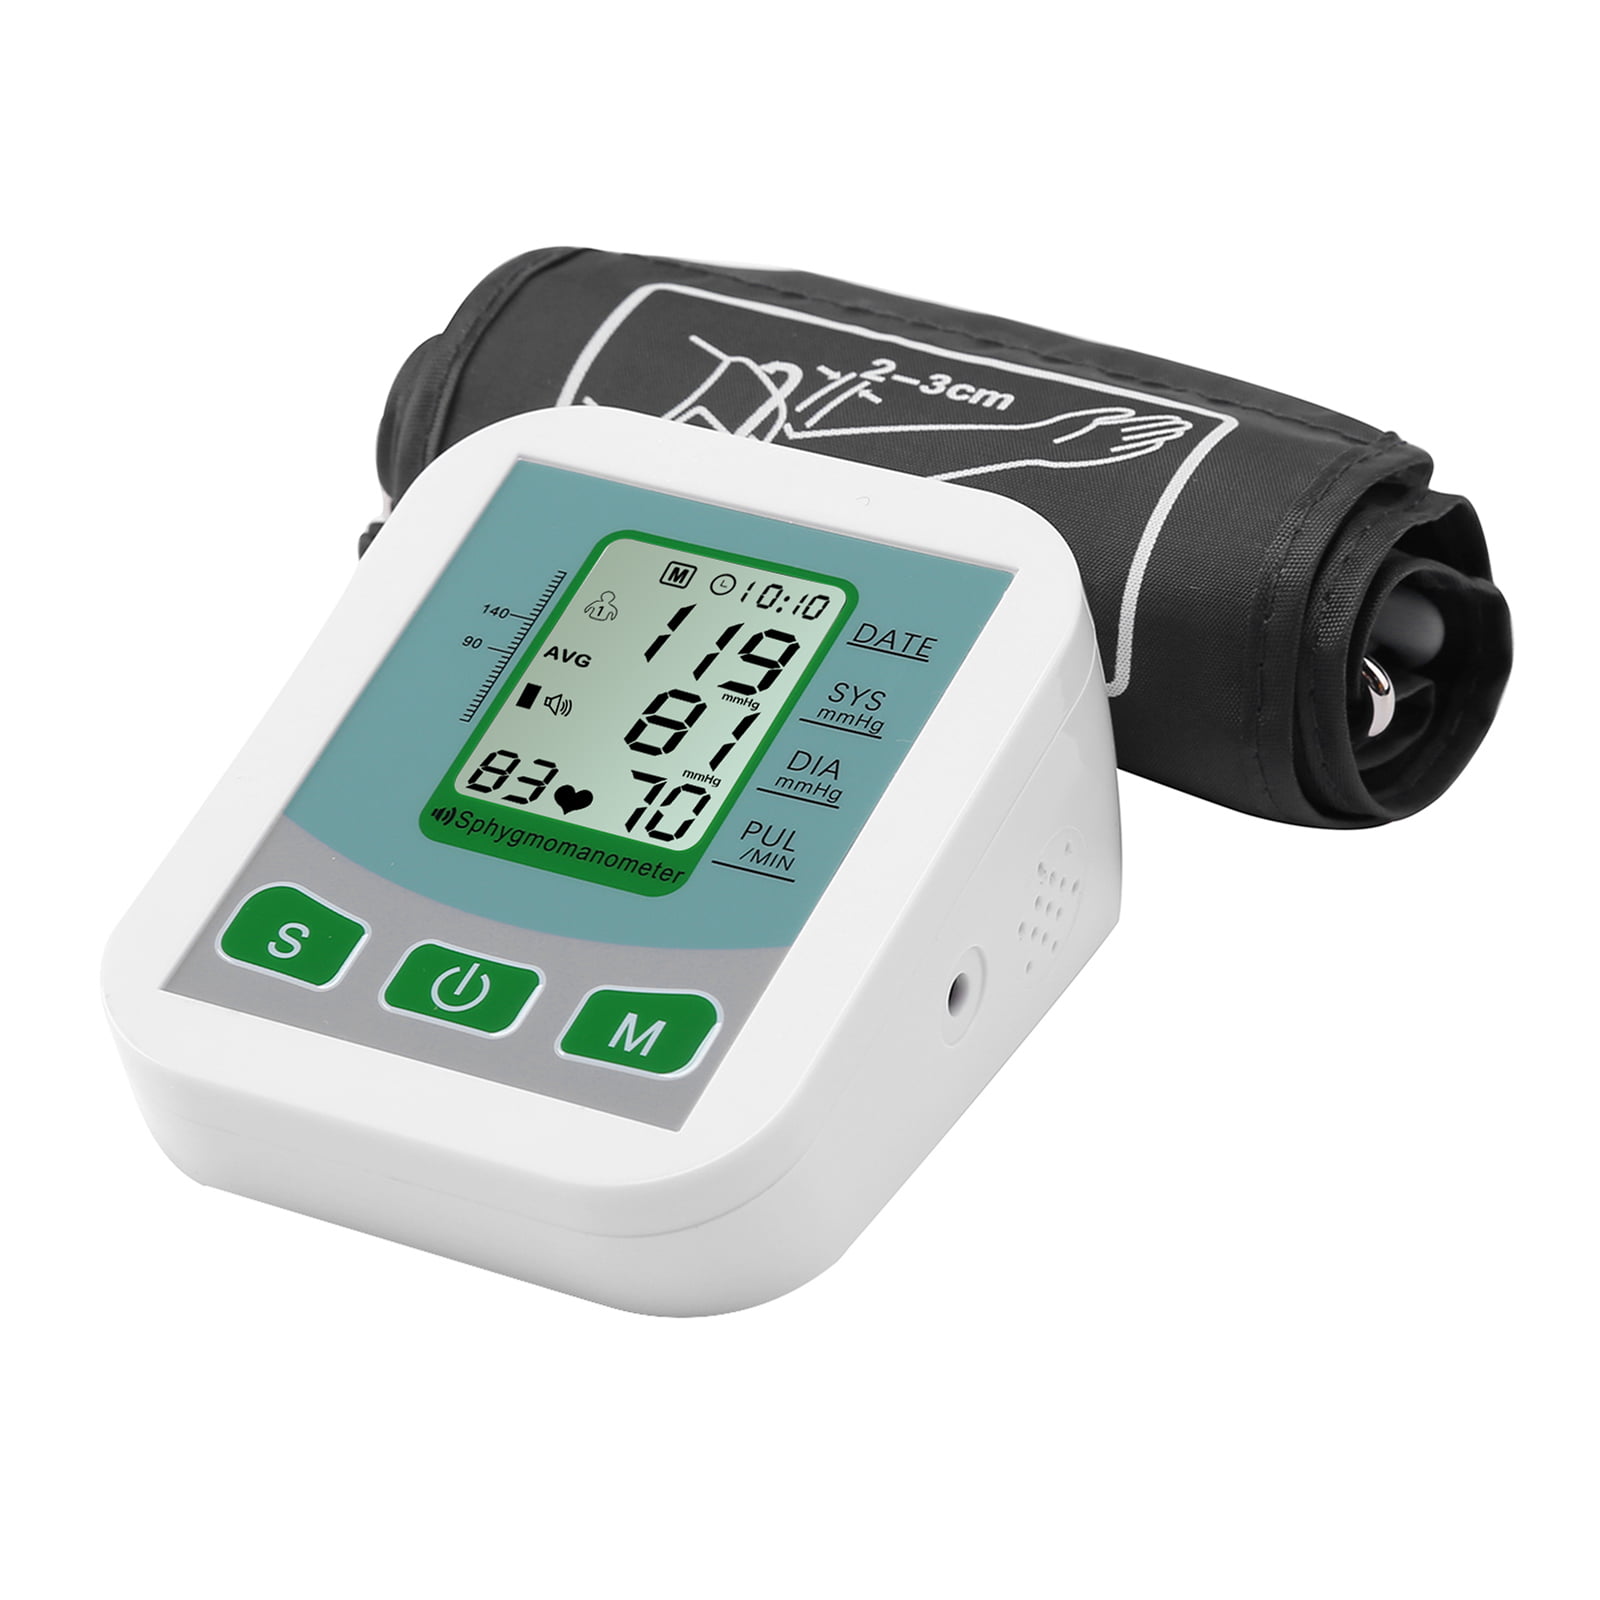 Blood Pressure Monitor sphygmomanometer Wrist Voice Broadcast Measuring Instrument LCD Digital Display Accurate Measurement,White 